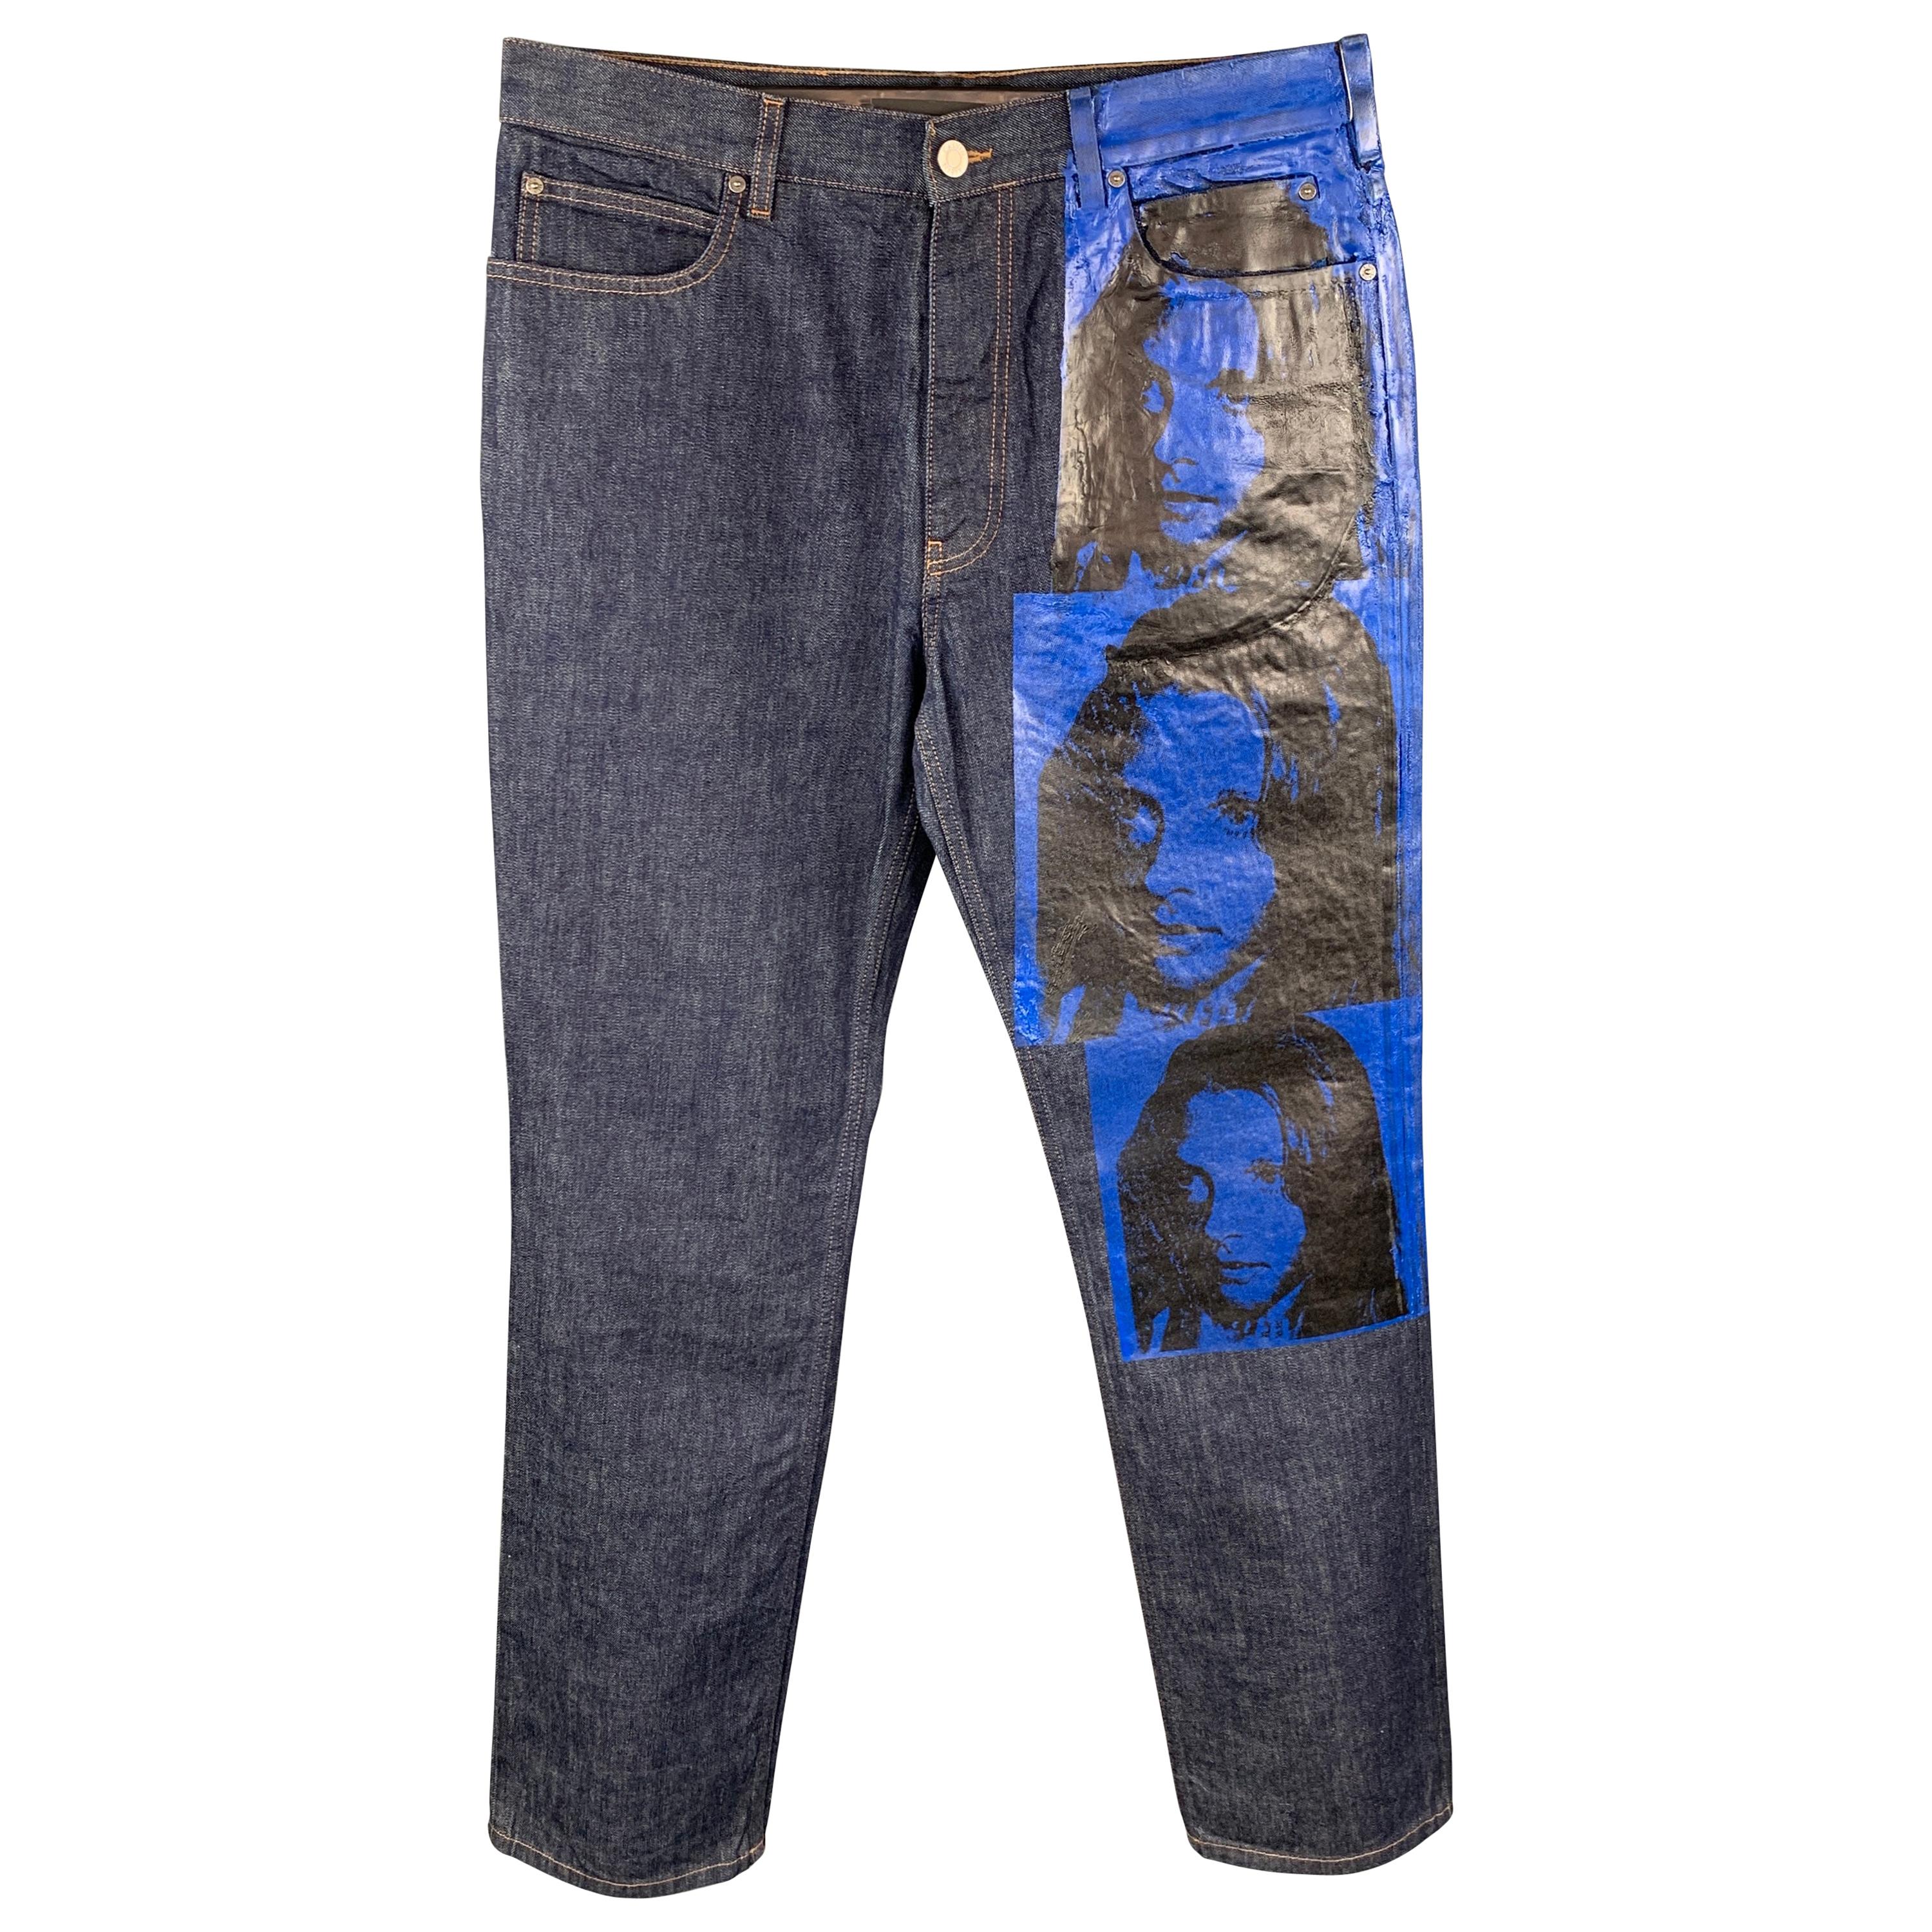 CALVIN KLEIN 205W39NYC by RAF SIMONS x Andy Warhol Size 34 Indigo Pants